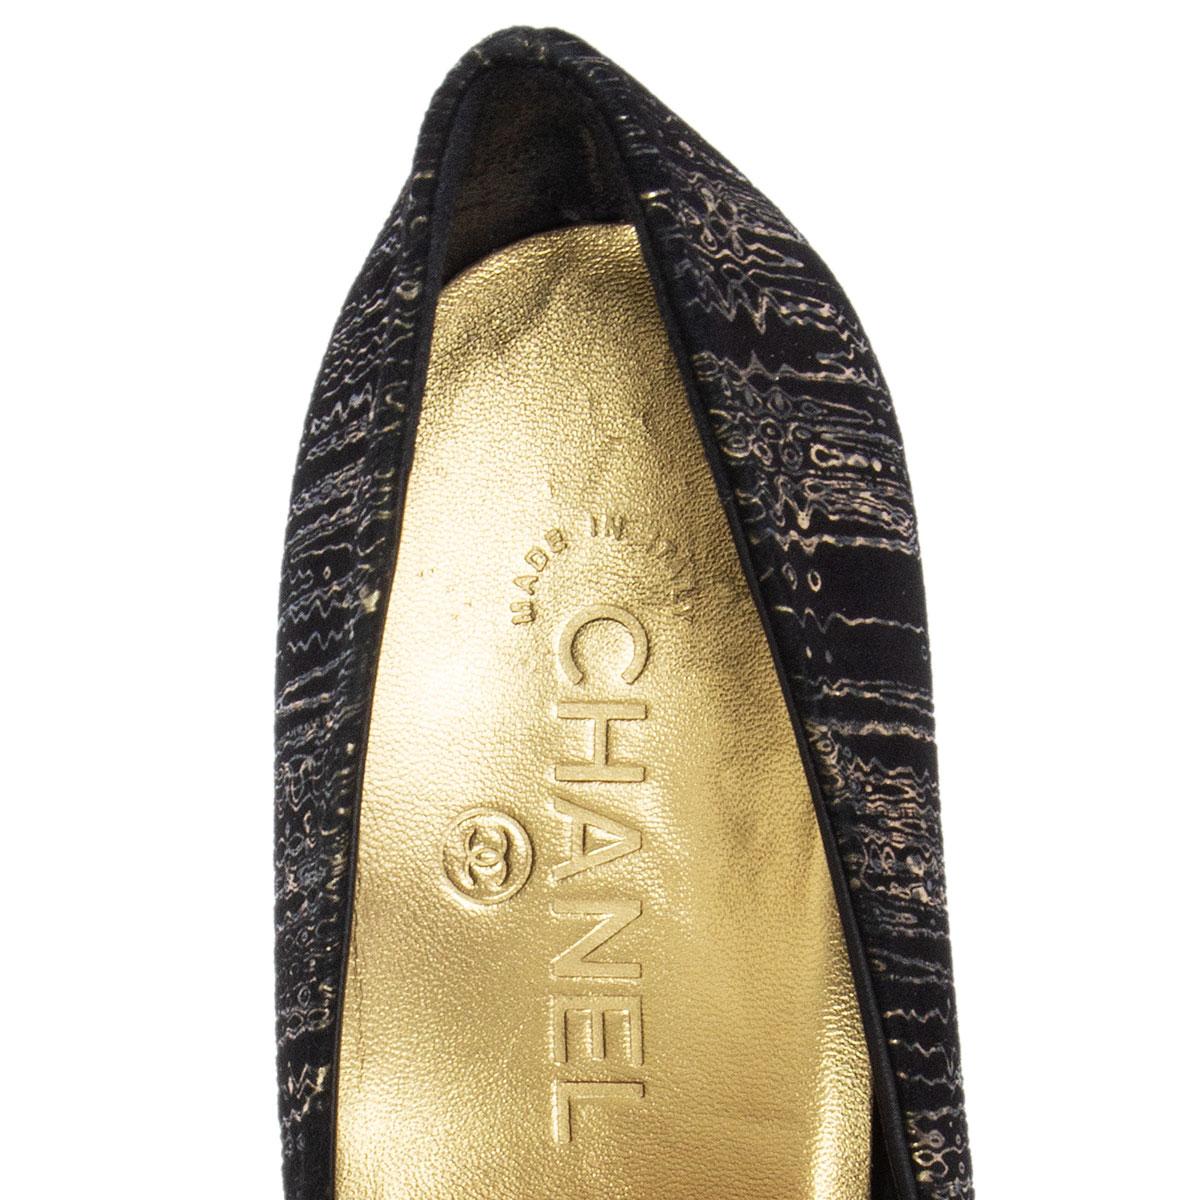 Black CHANEL black & gold suede PEARL HEEL Pumps Shoes 38.5 For Sale